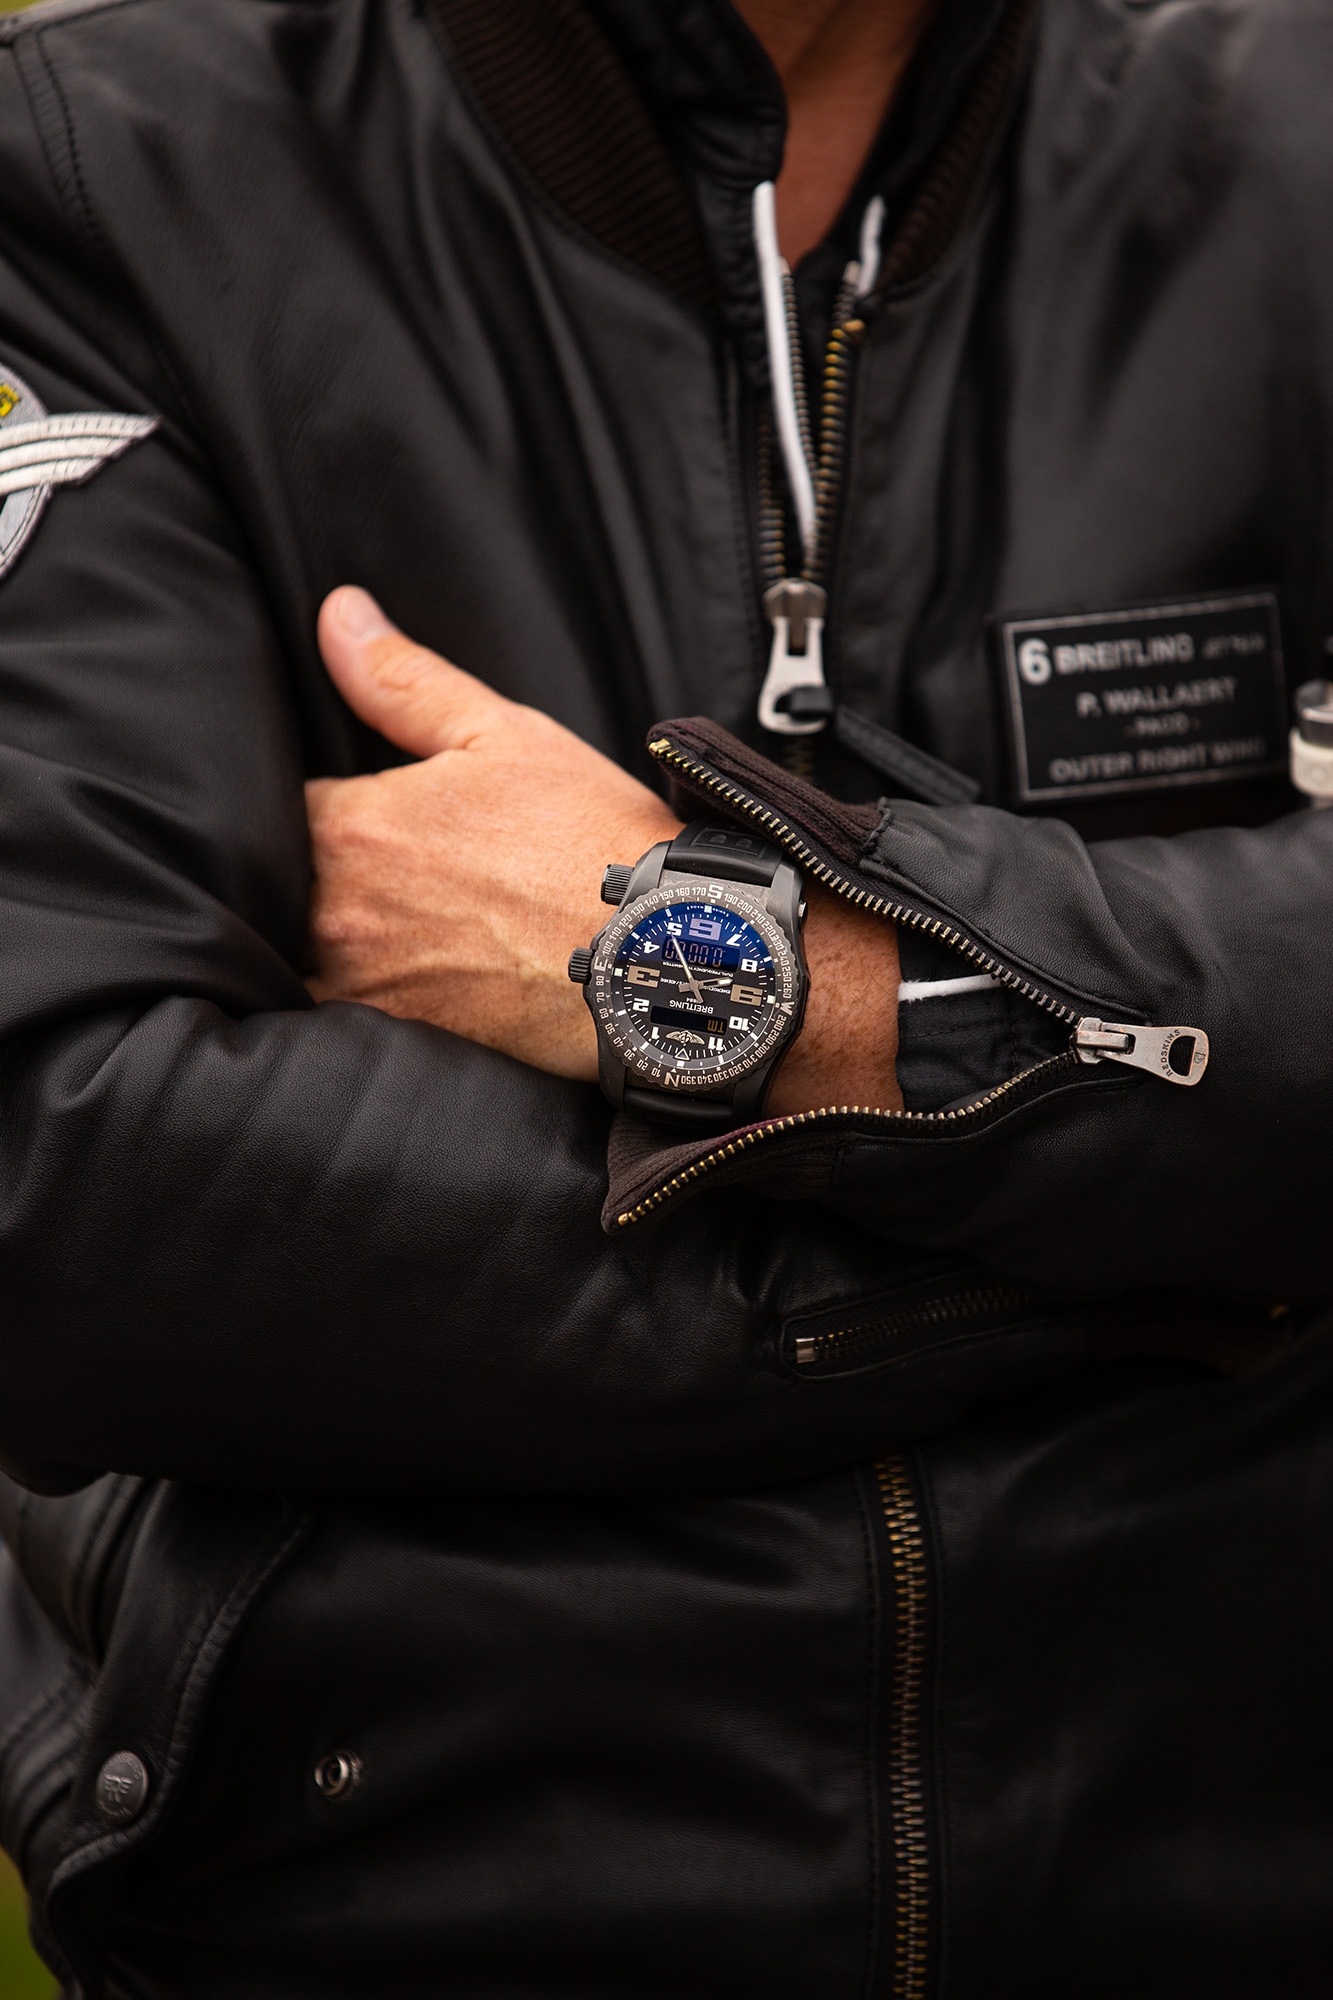 Pilot wearing the Breitling Emergency watch